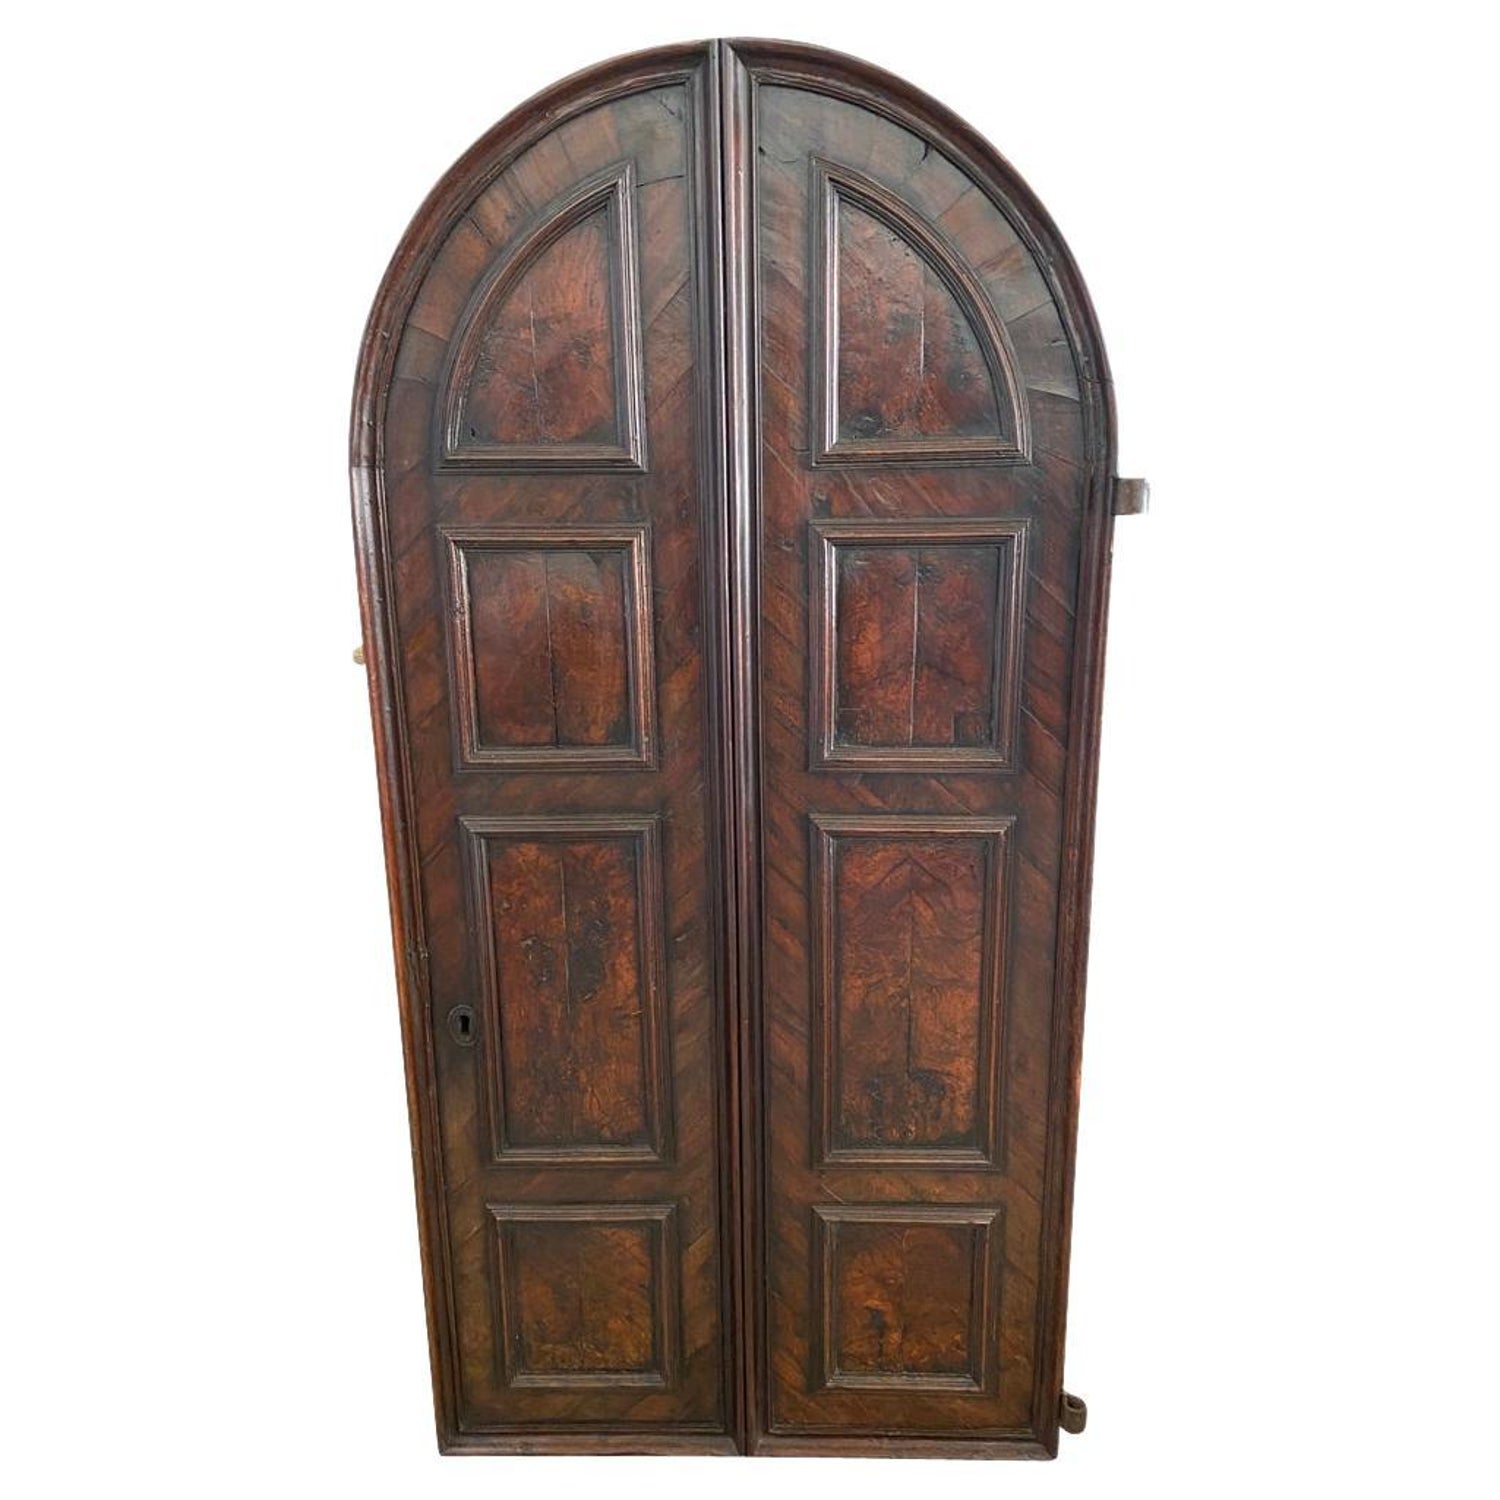 https://a.1stdibscdn.com/early-17th-century-italian-door-for-sale/f_9256/f_328314821676660373863/f_32831482_1676660374144_bg_processed.jpg?width=1500